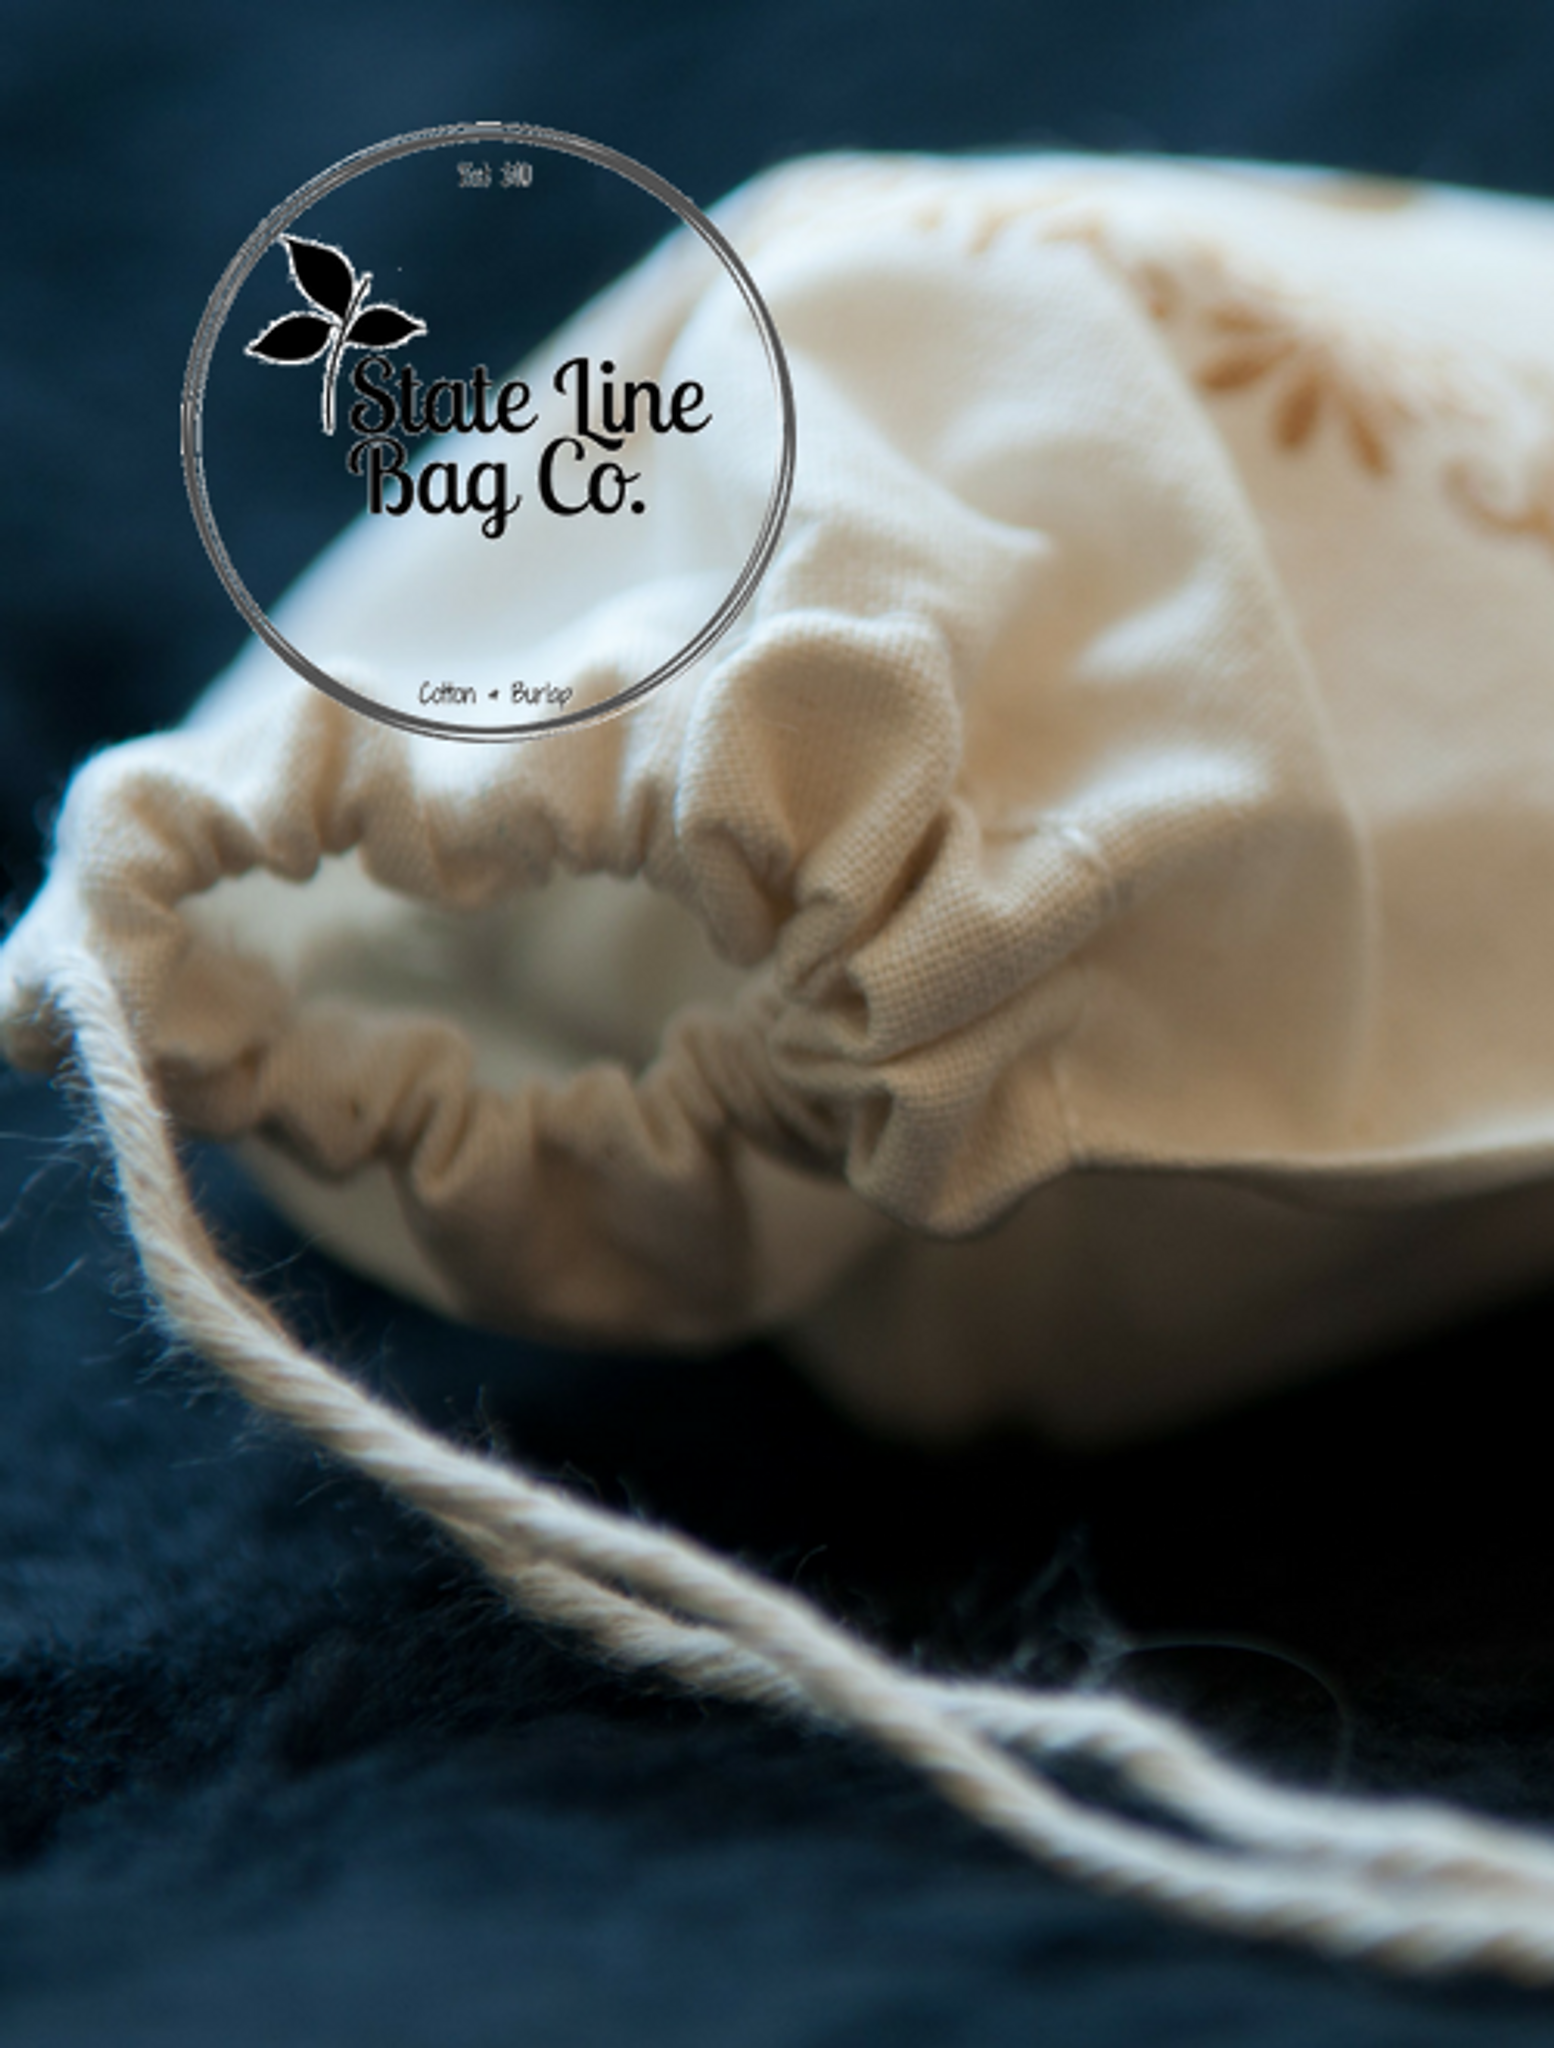 100% Cotton Double Drawstrings Premium Quality Muslin Bags